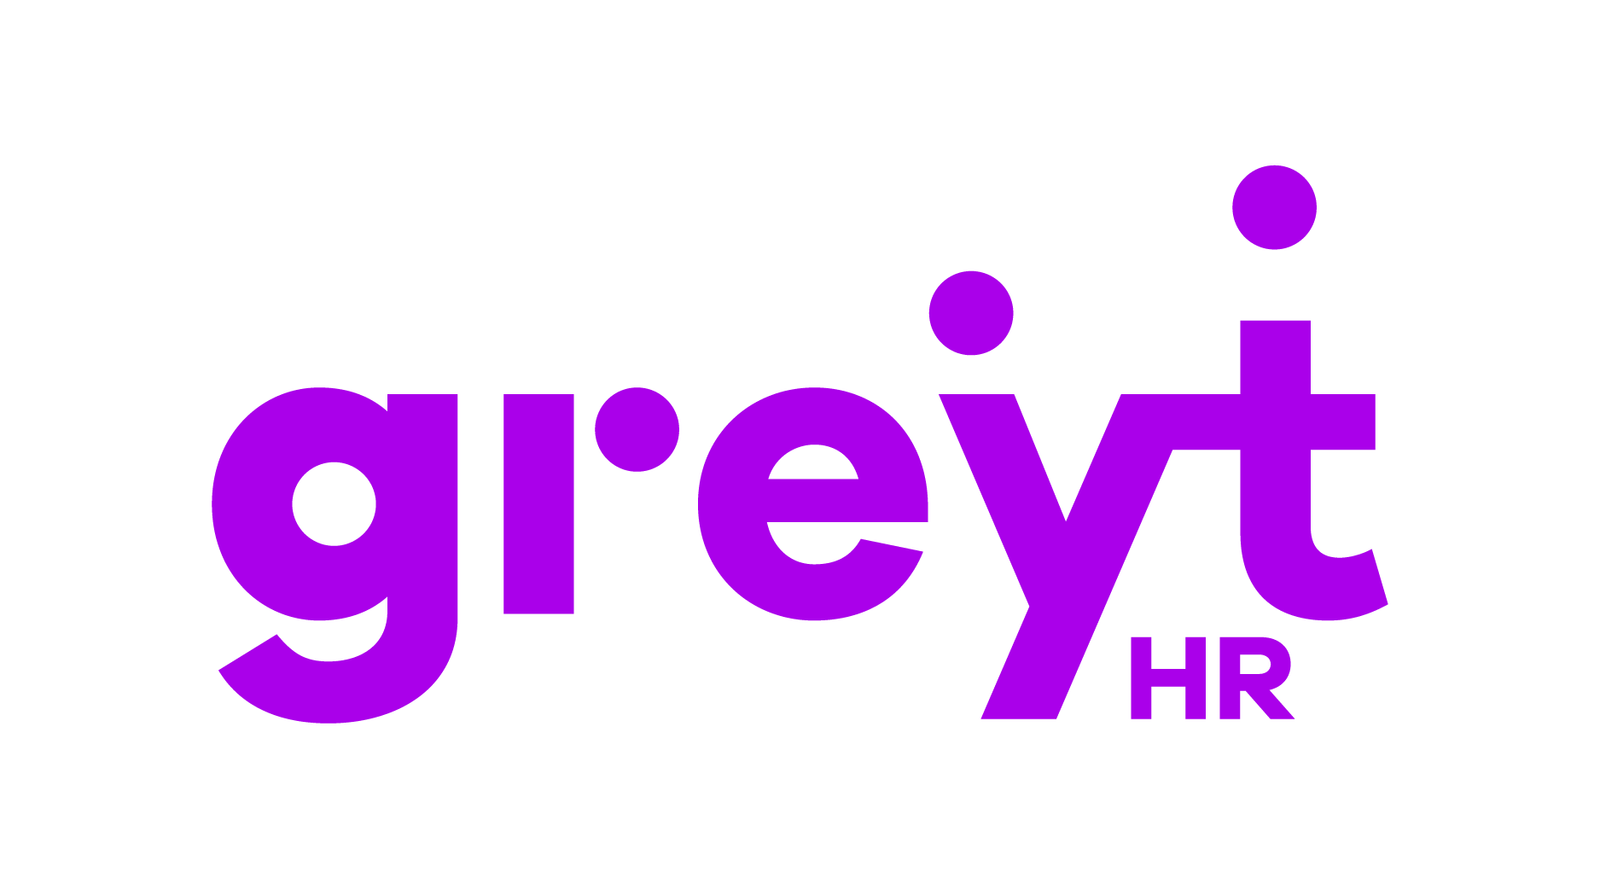 greytFM Podcast Triumphs at the Hubhopper Podcast Awards 2023